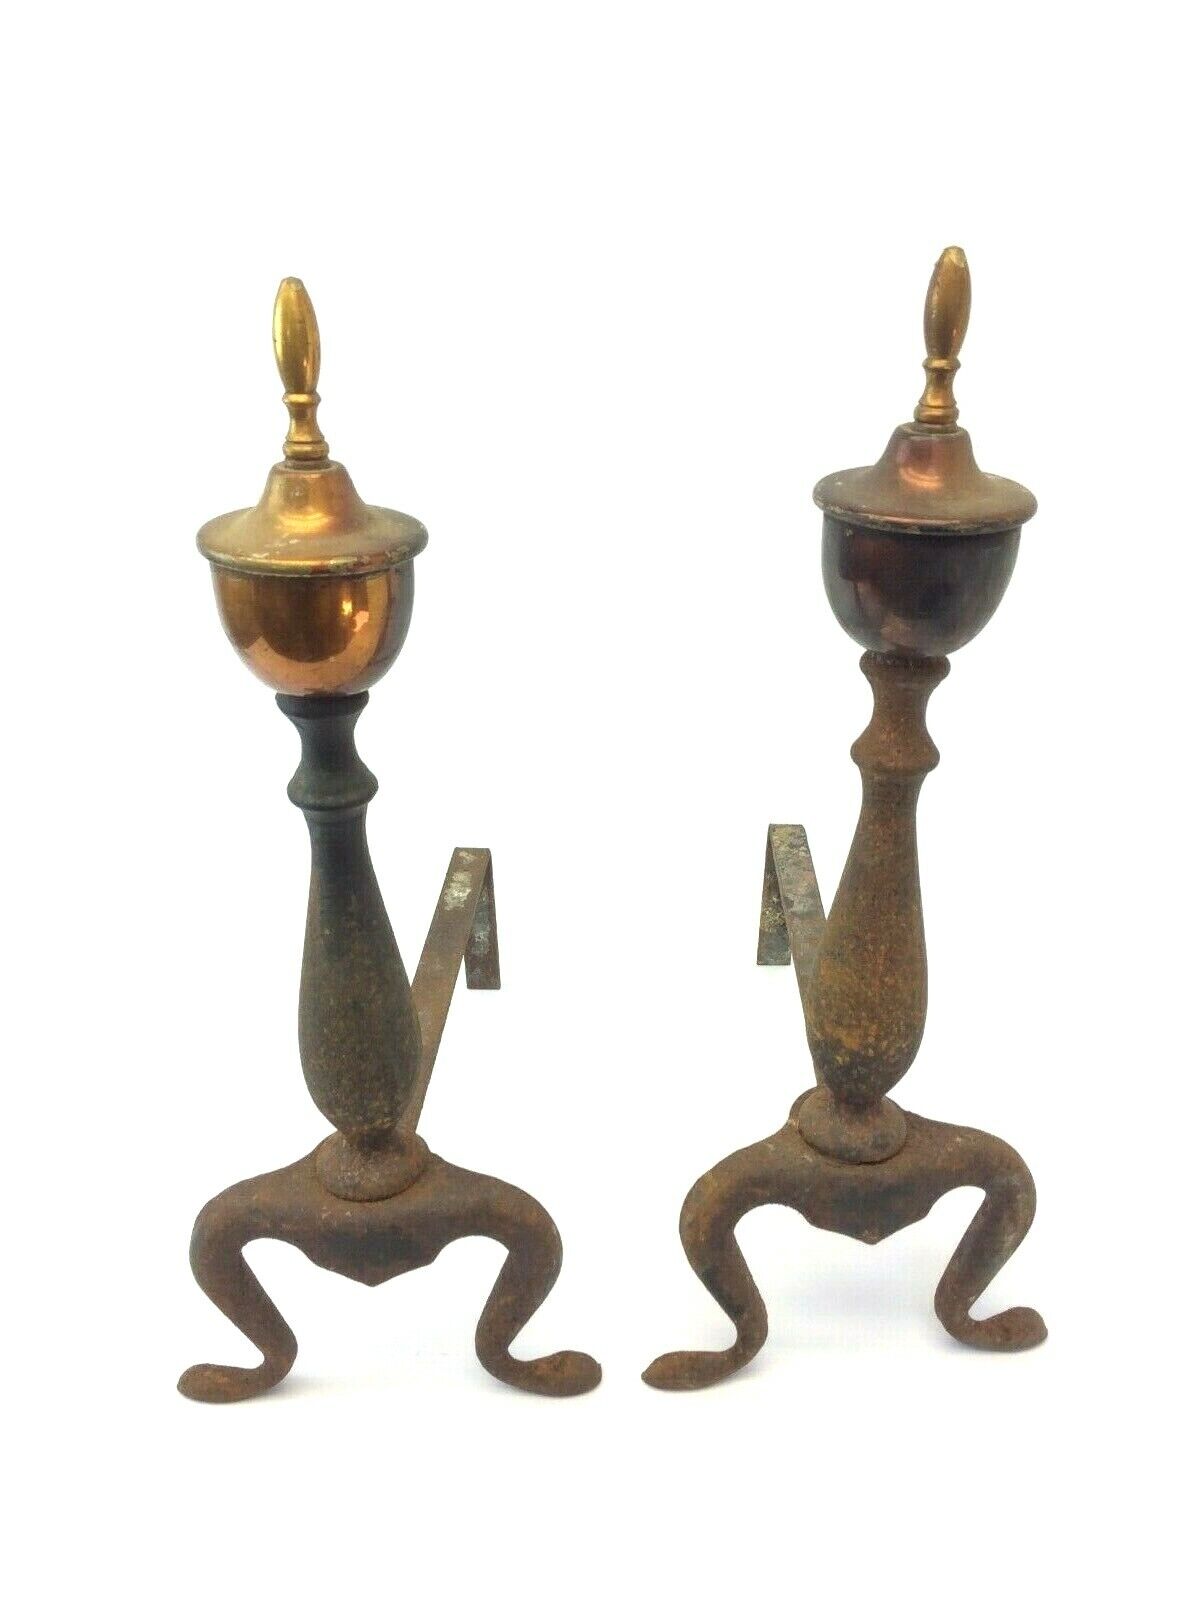 Pair of Vintage Used Old Iron Brass Decorative Fireplace Andirons Hardware Niska cena nowej pracy